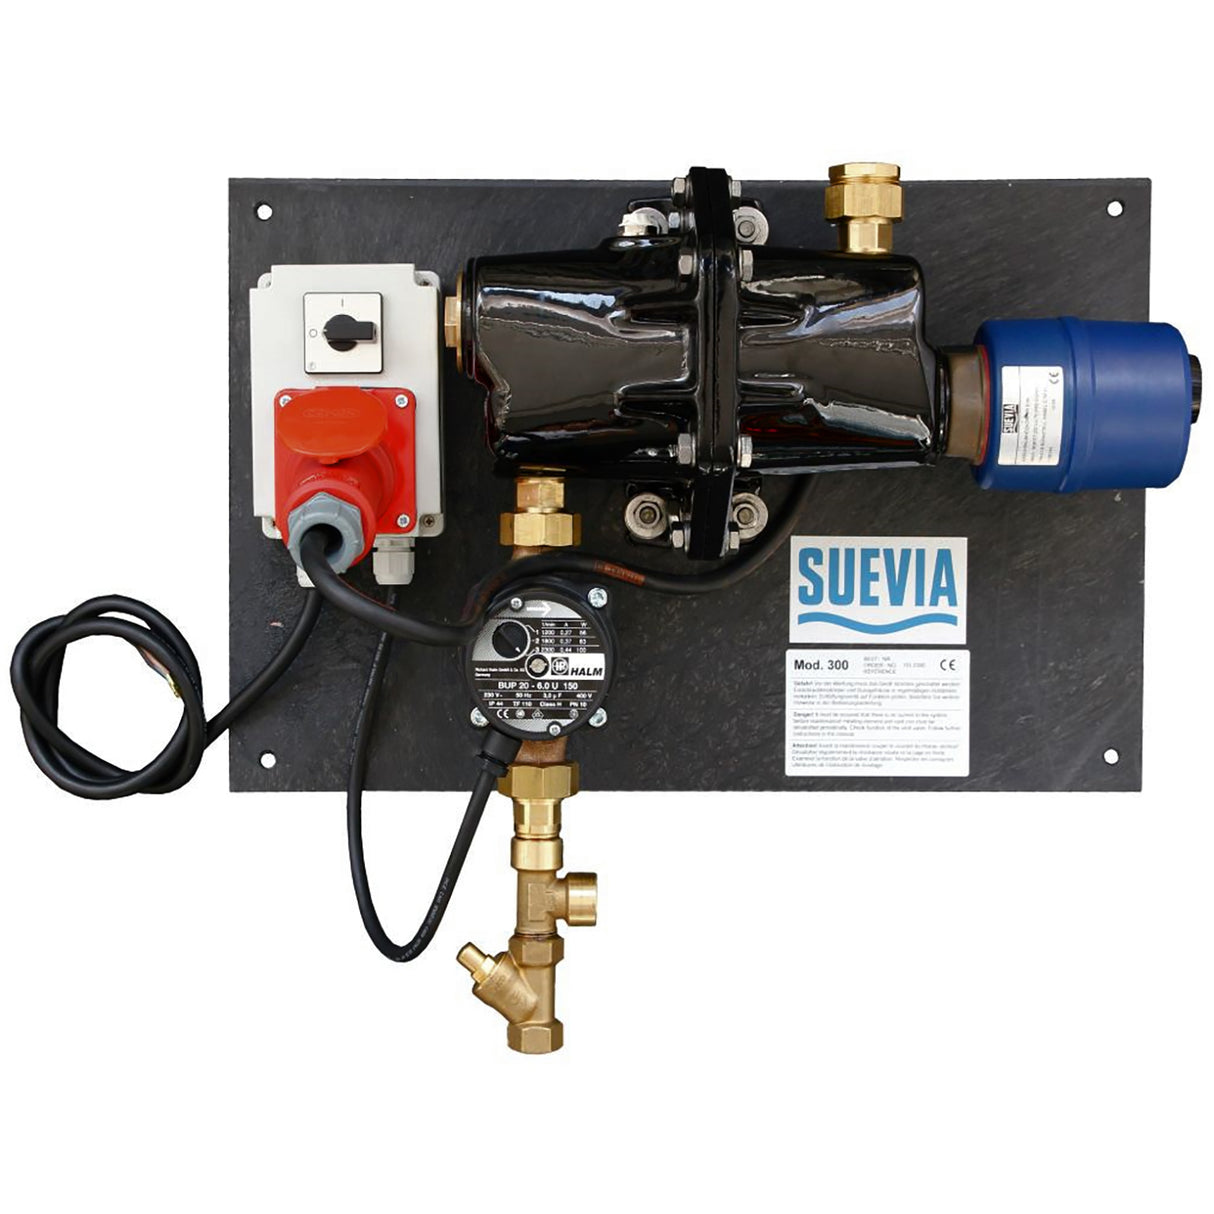 Suevia Hot water circulation unit Model 300, 3000W, 400V